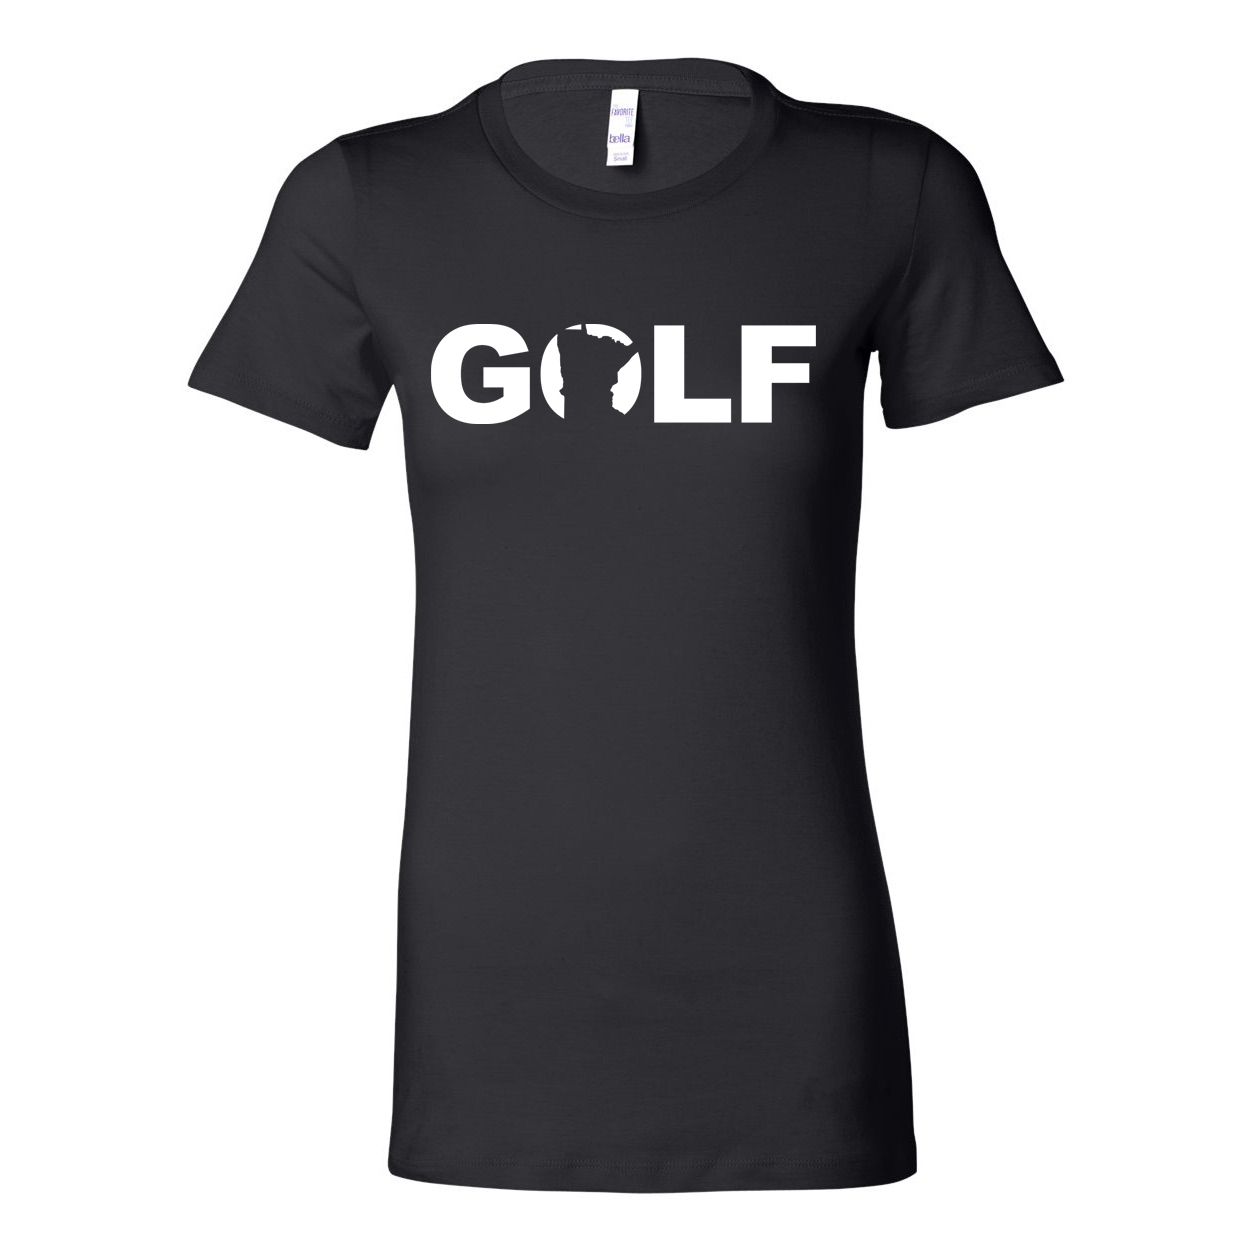 Golf Minnesota Classic Women's Fitted Tri-Blend T-Shirt Black (White Logo)